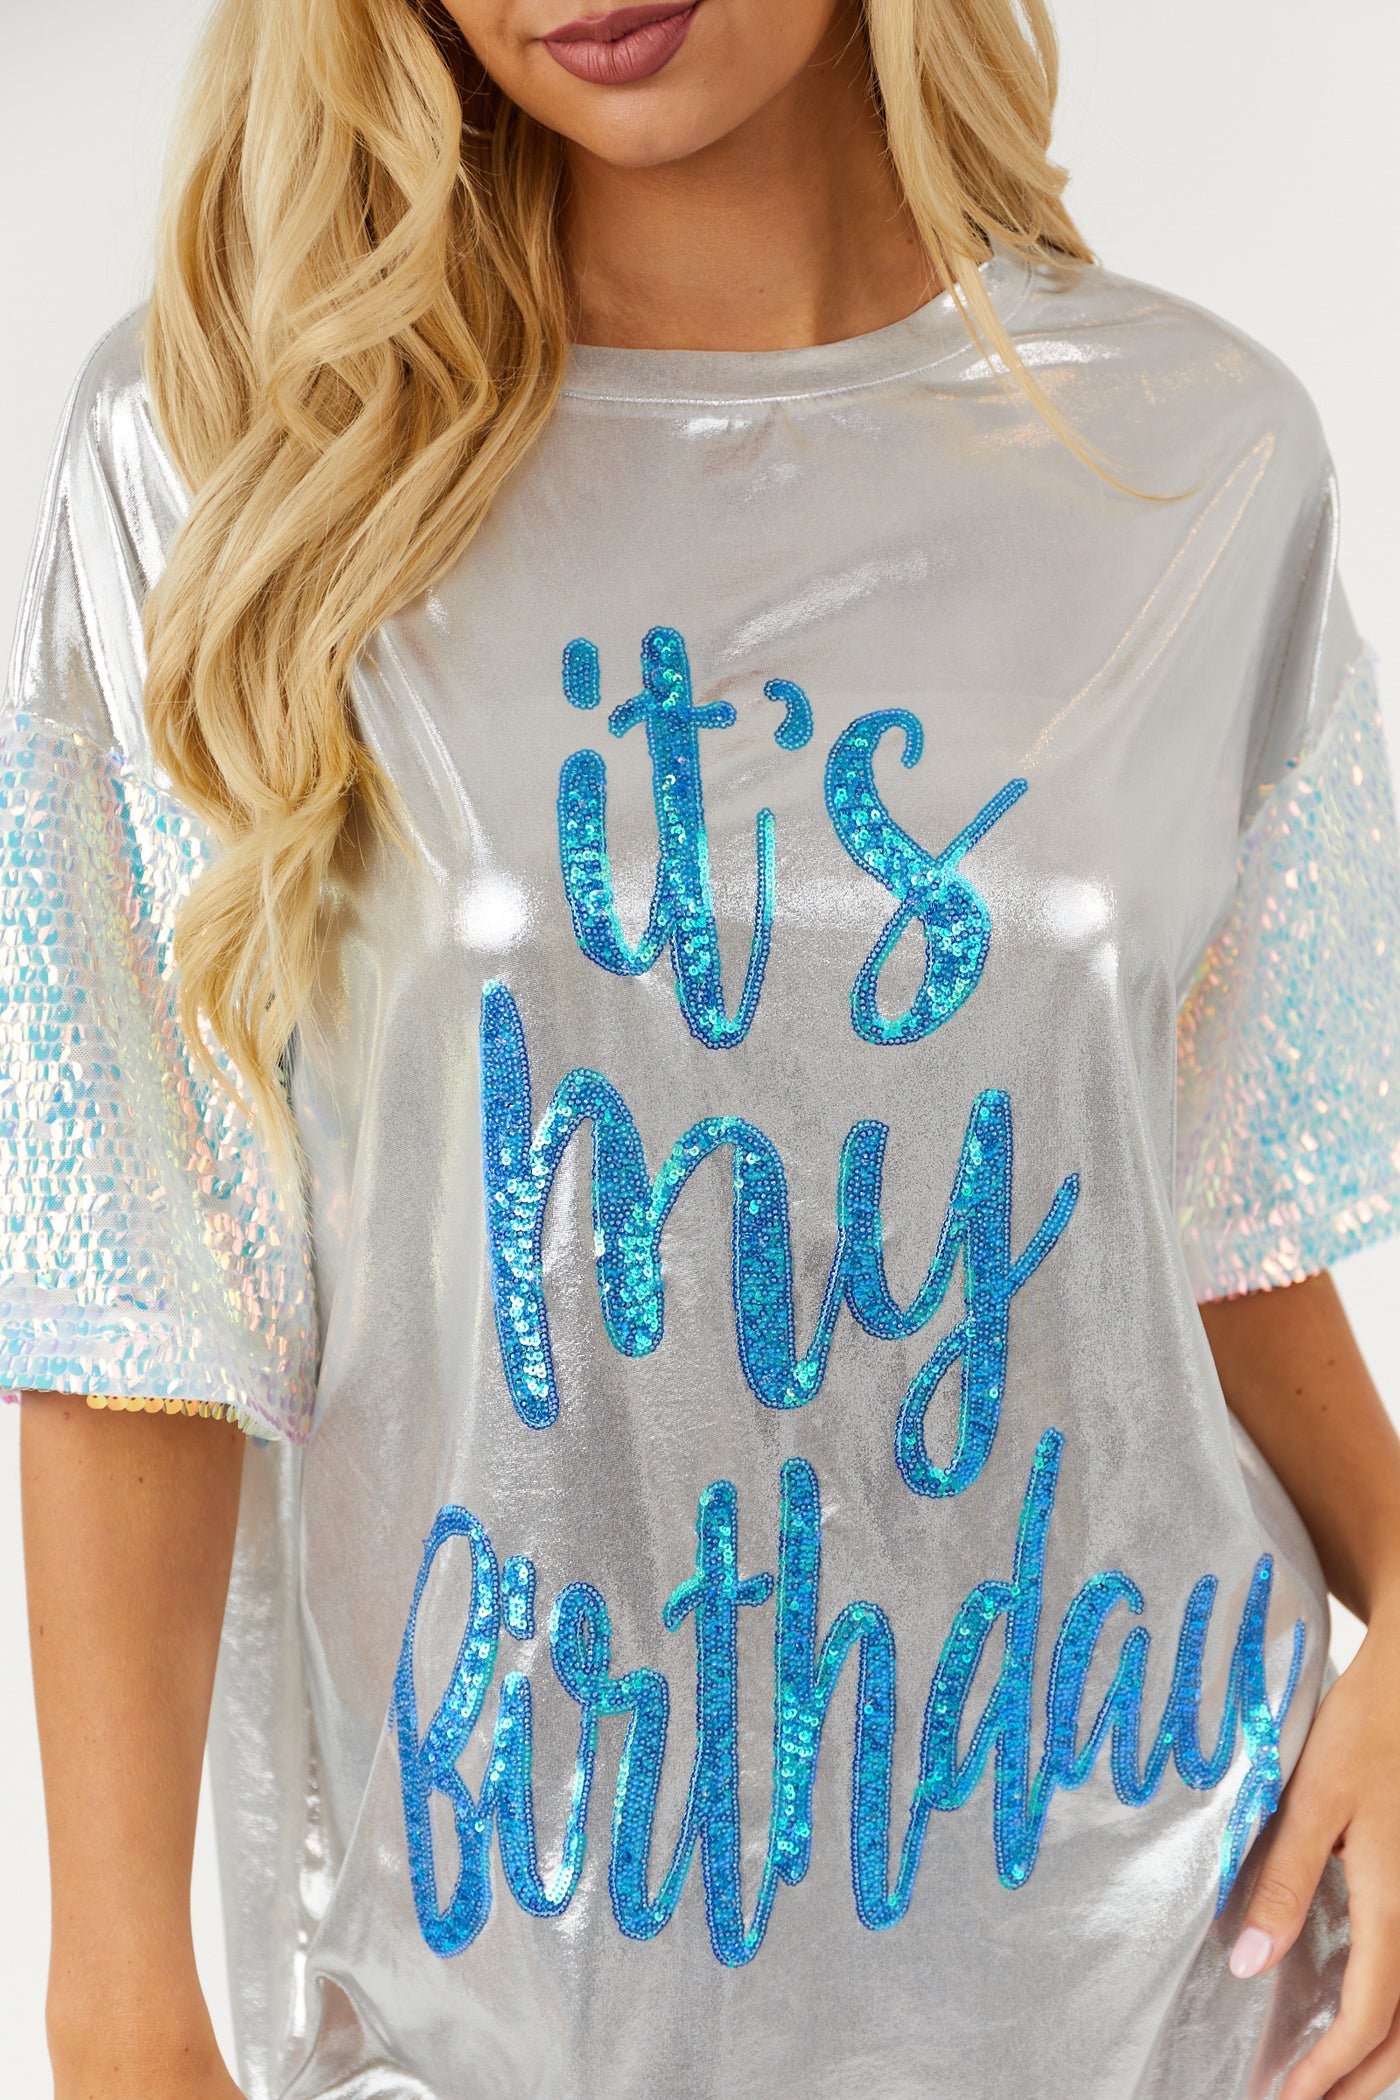 Metallic Silver 'It's My Birthday' Tee Shirt Dress